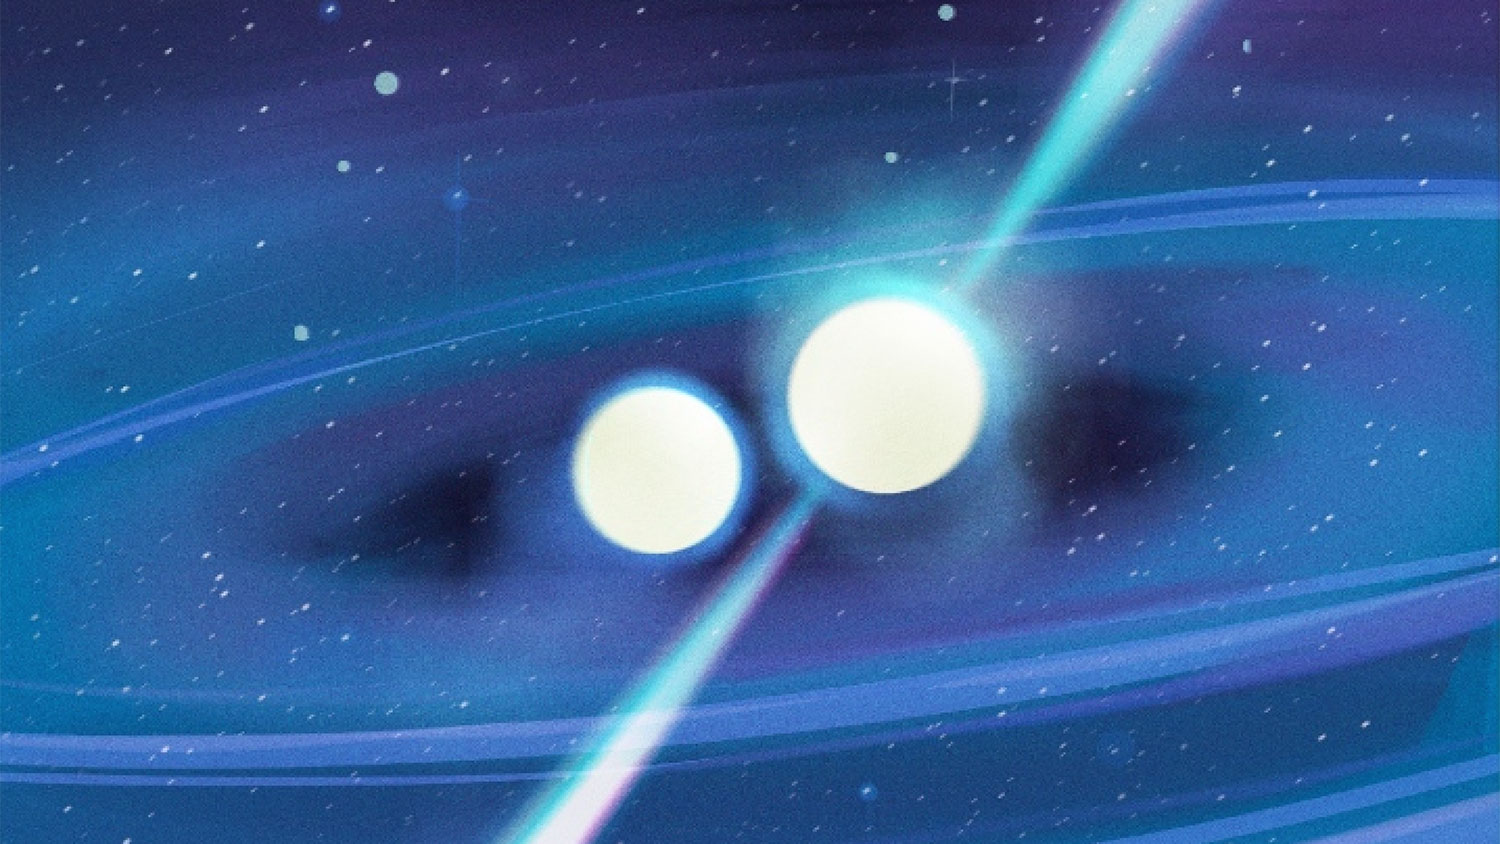 Concept art of double neutron star system